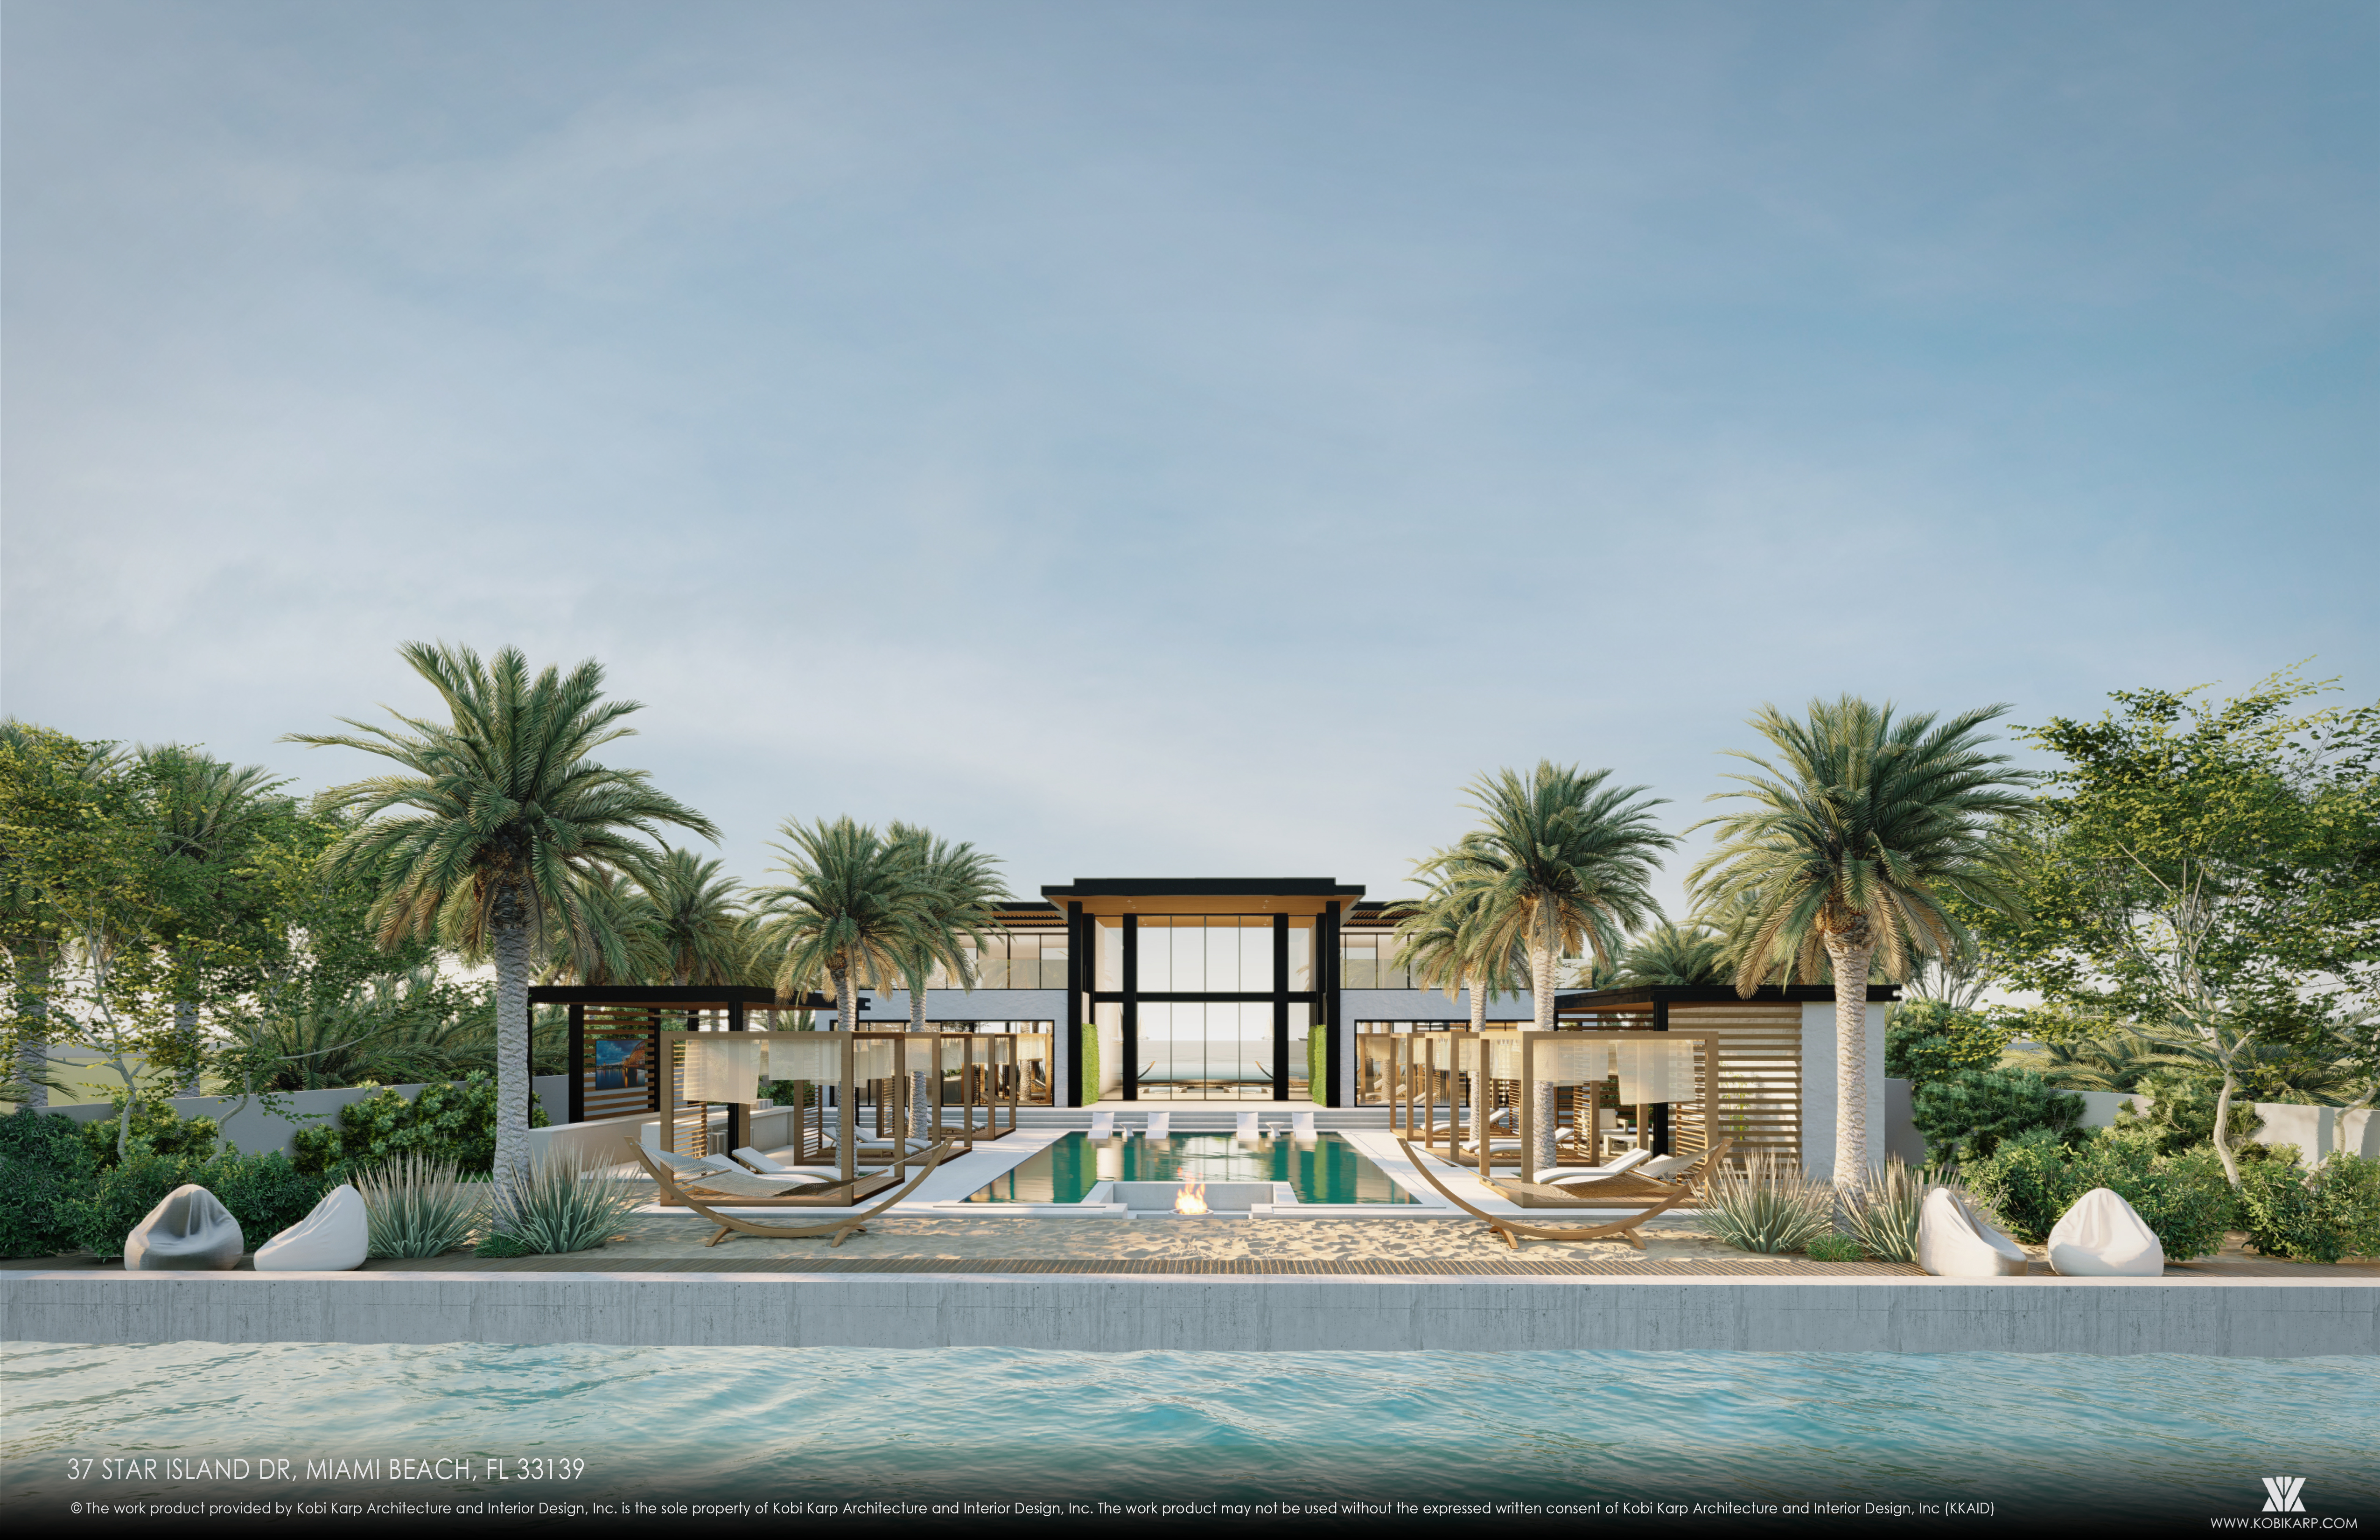 Rick Ross reveals huge renovation plans for $37M Miami mansion.